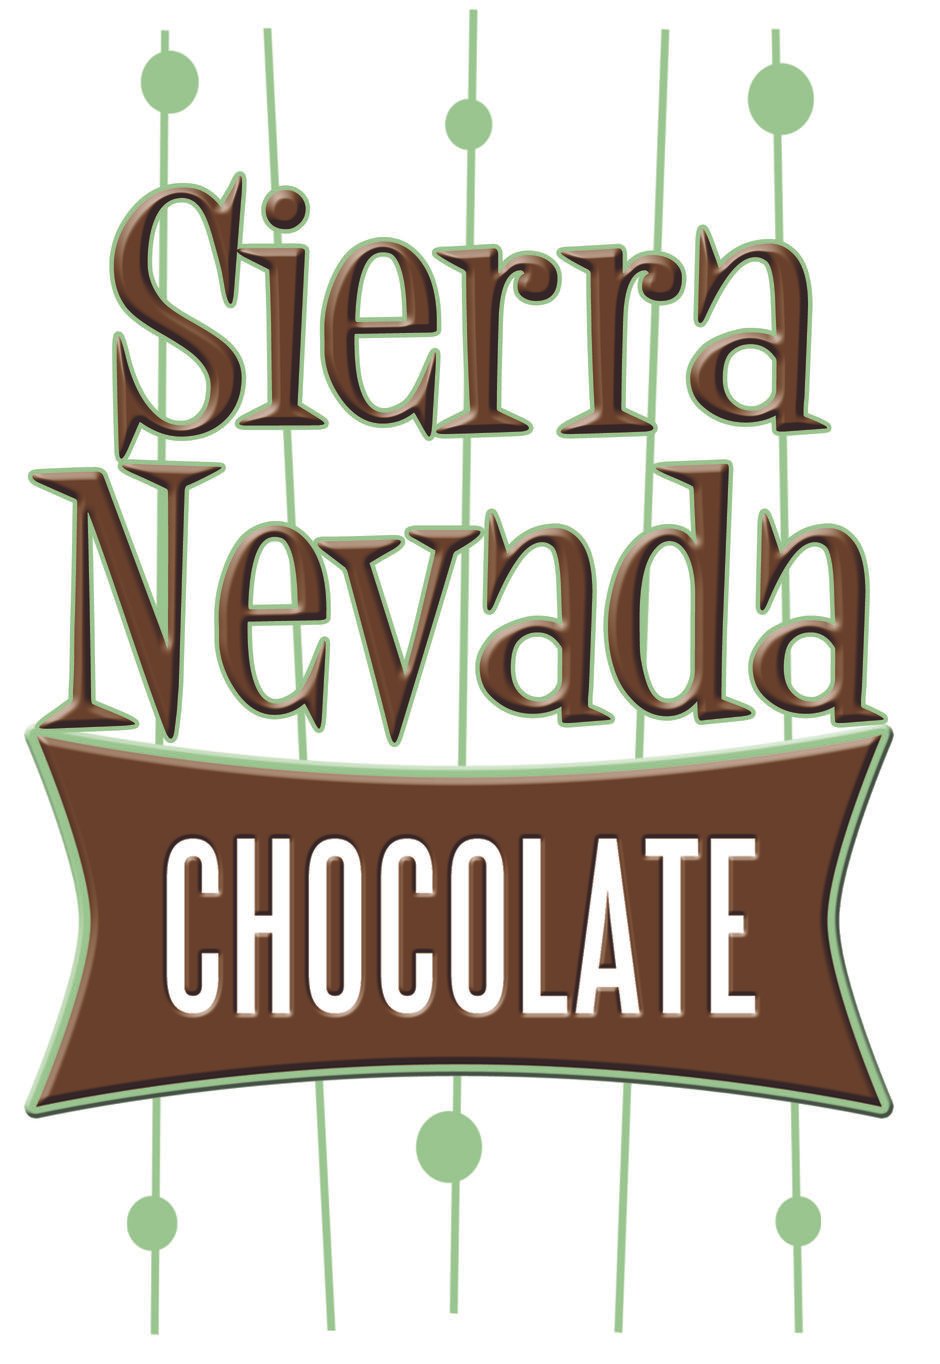 Sierra Nevada Chocolate Co.